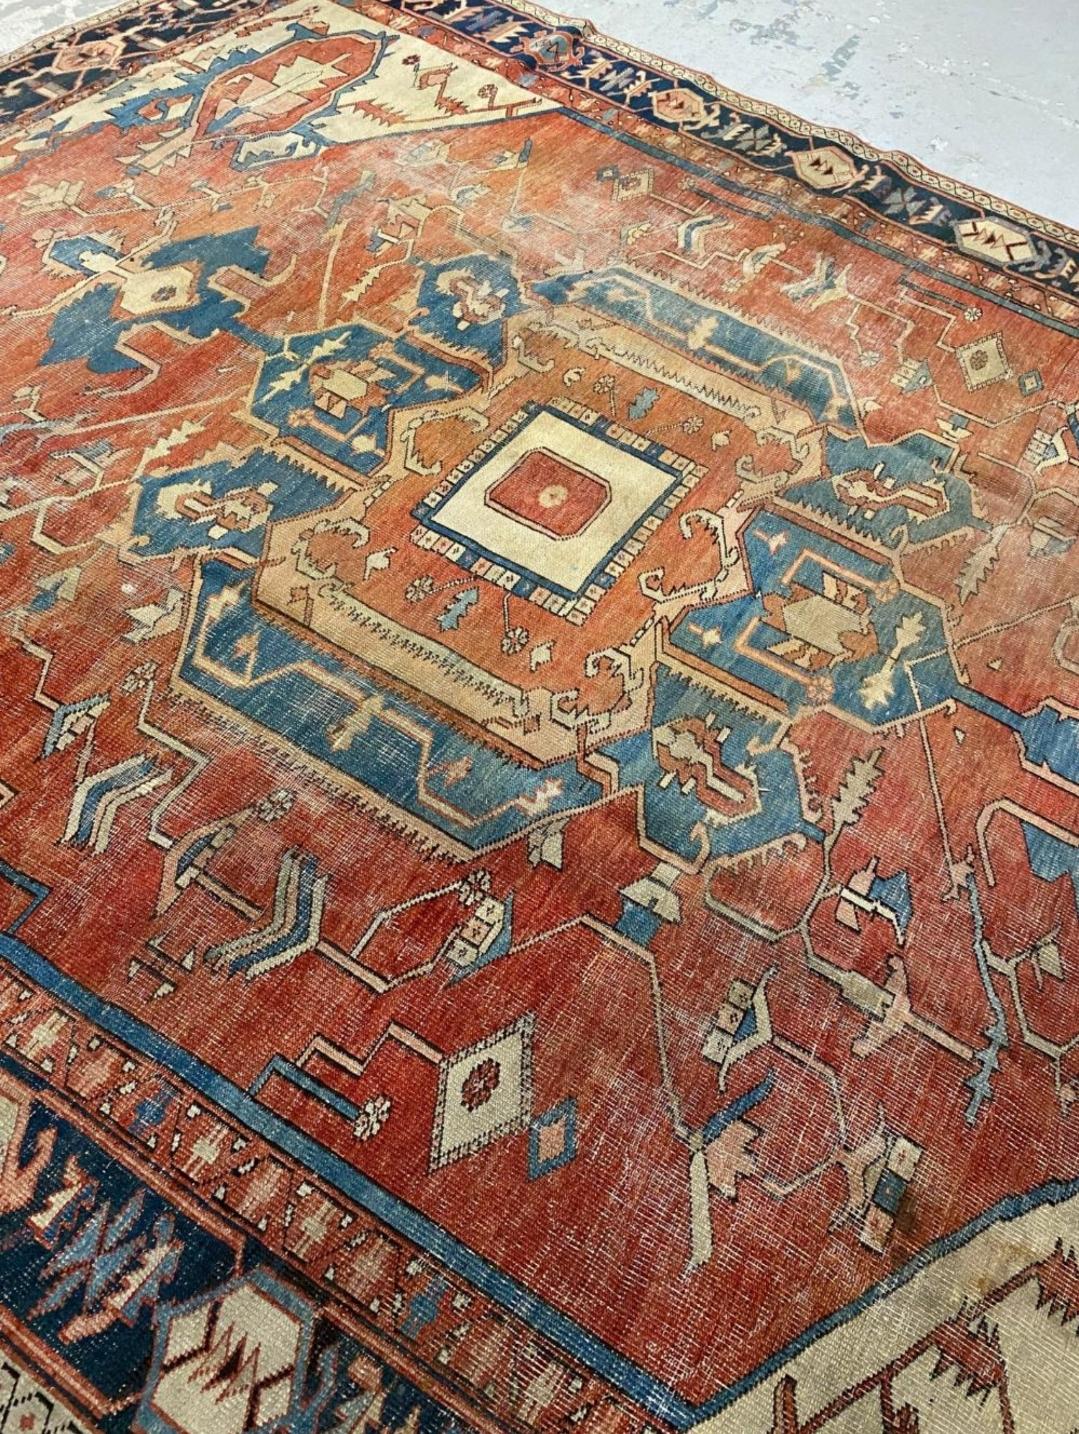 Hand-Woven 19th Century Antique Persian Serapi Carpet Handmade Oriental Rug For Sale